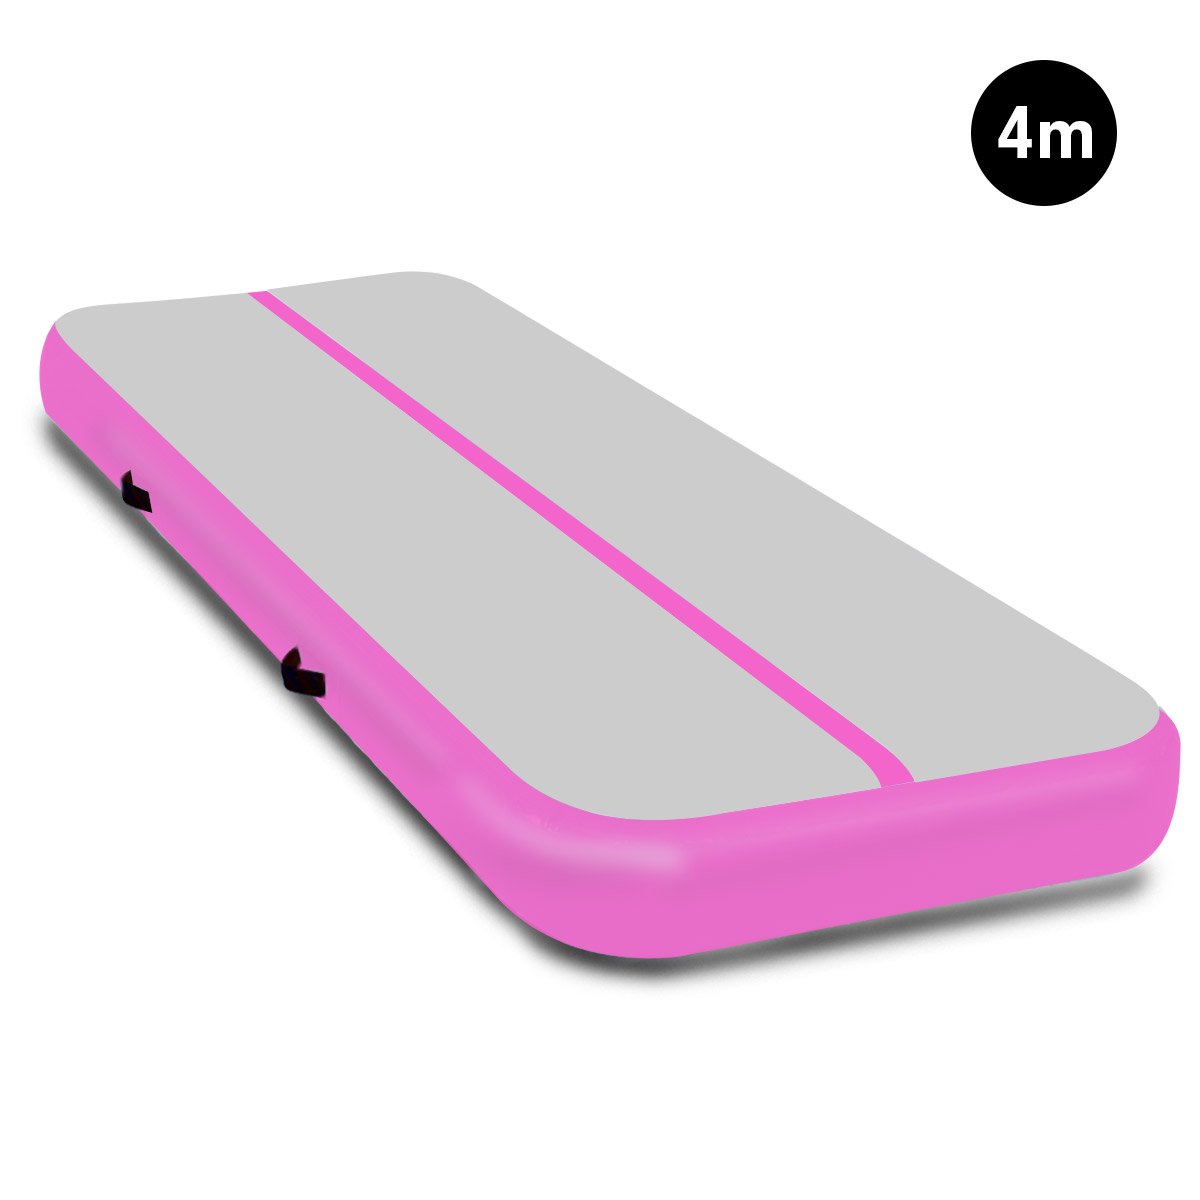 4m x 2m Air Track Gymnastics Mat Tumbling Exercise - Grey Pink 1